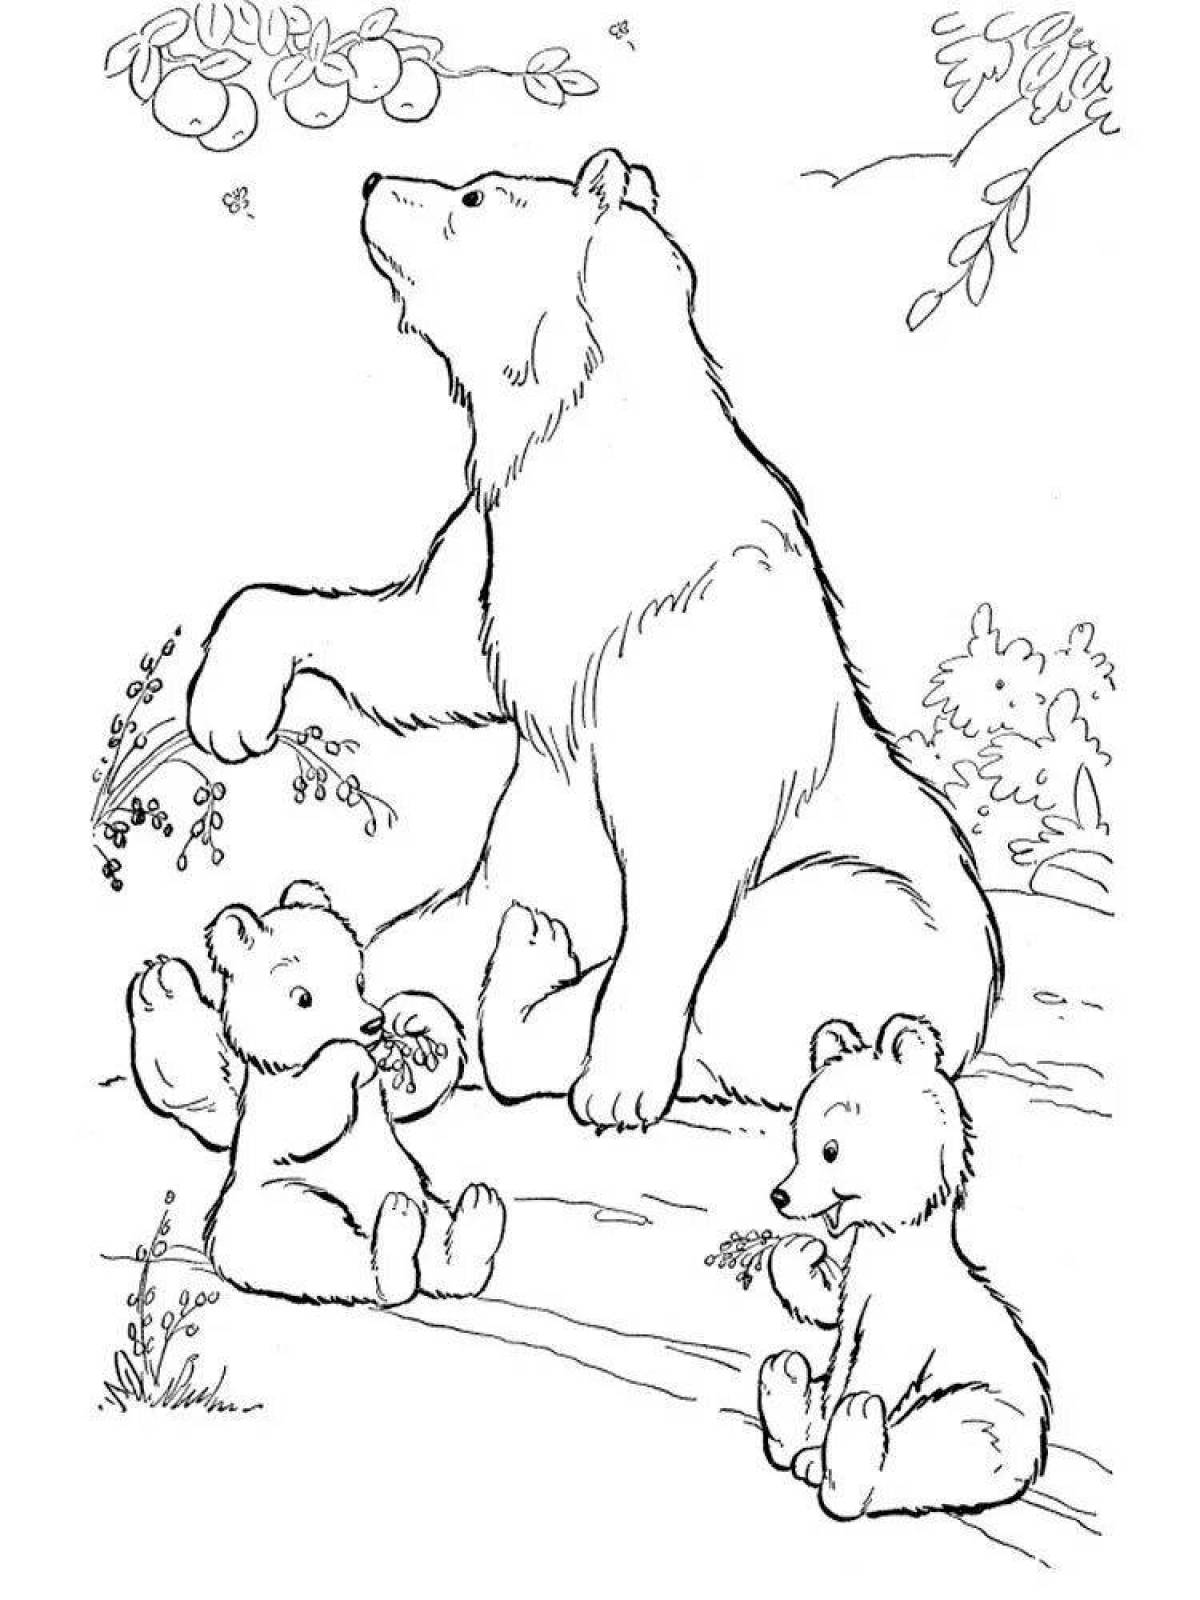 Playful teddy bear coloring book